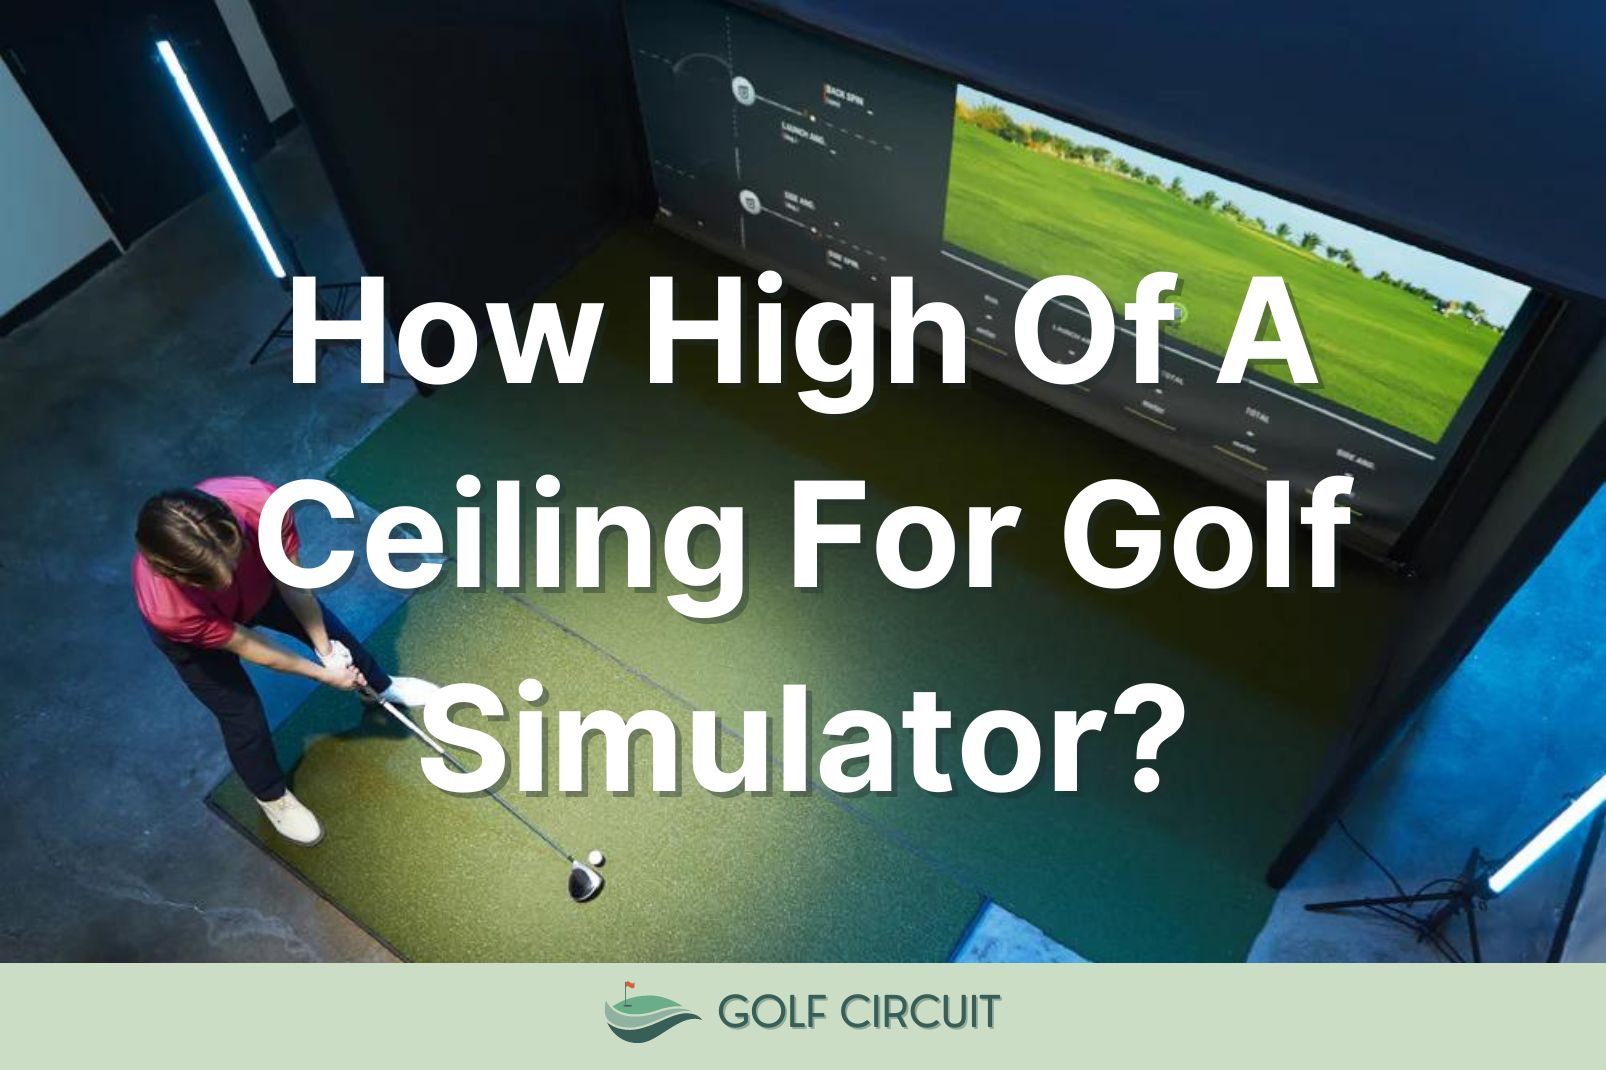 How High Ceiling for a Golf Simulator